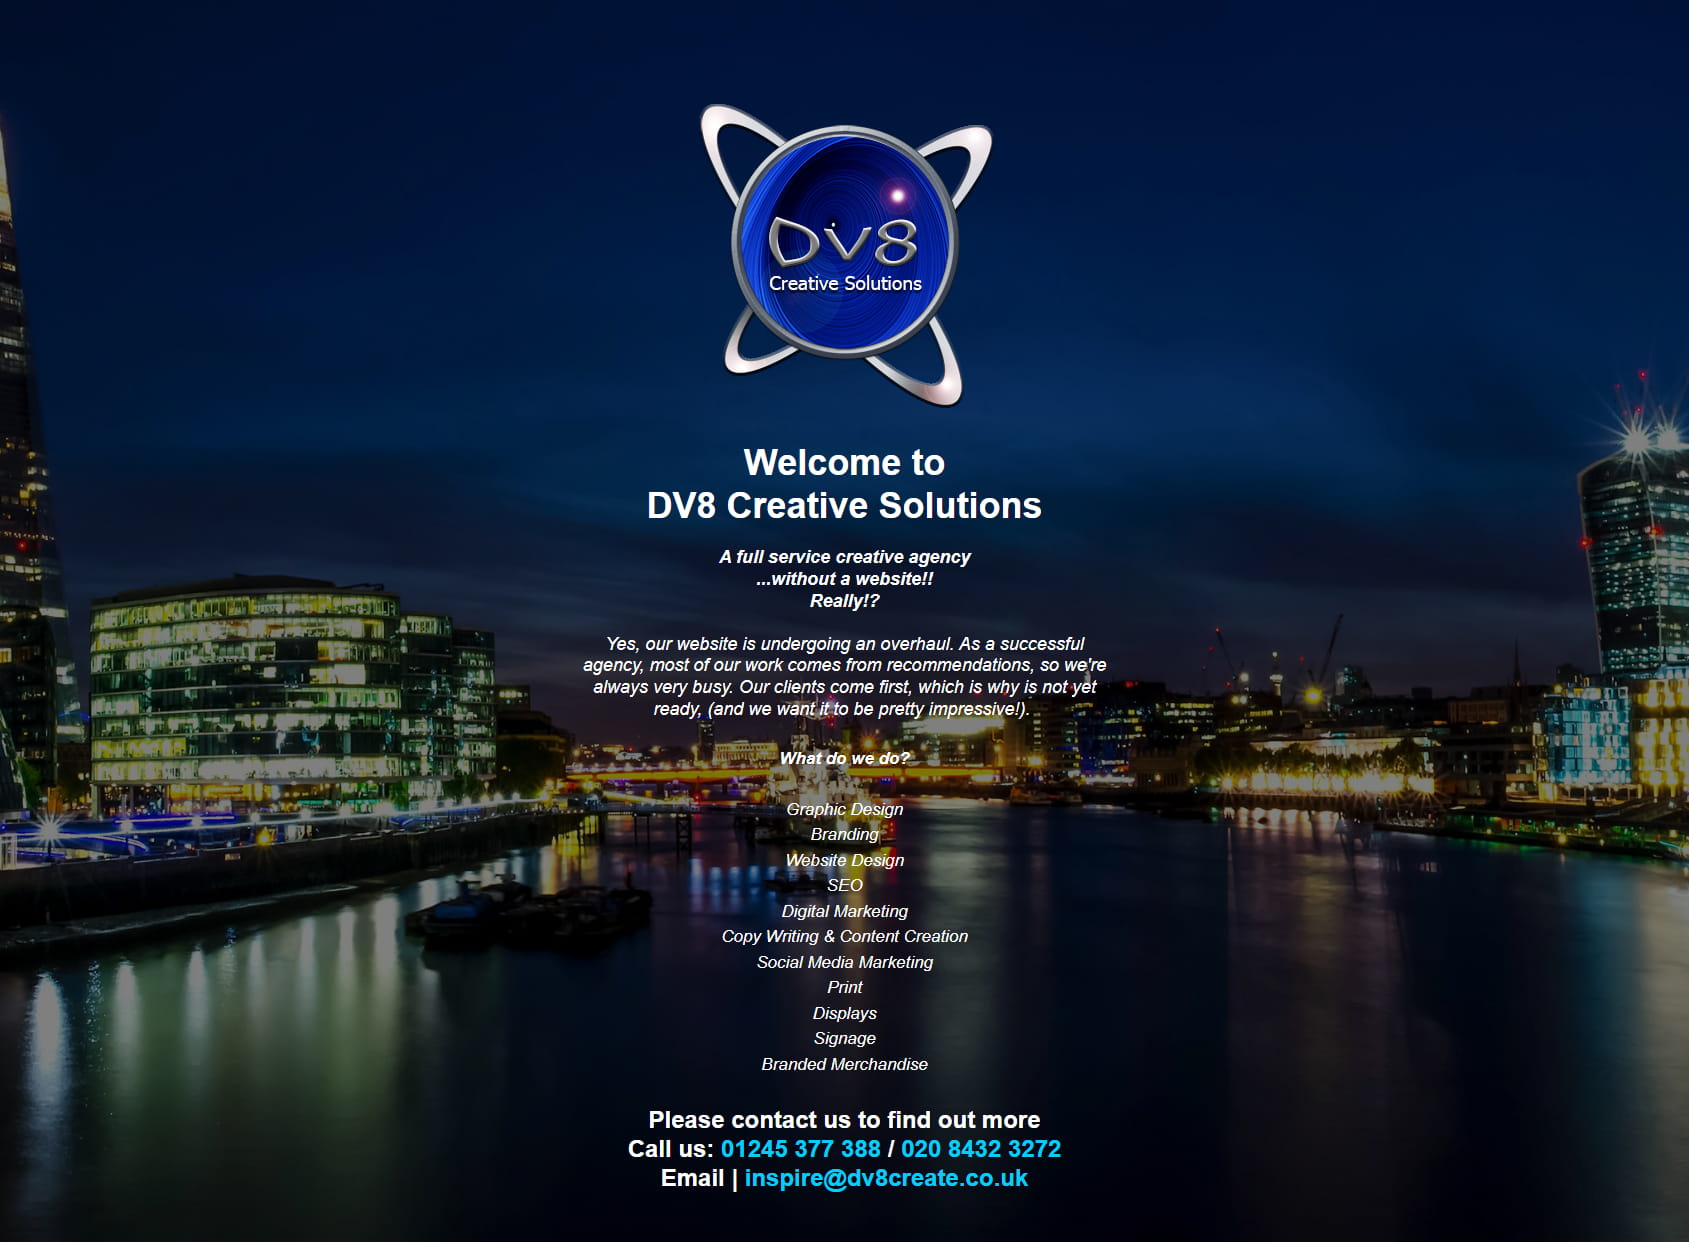 DV8 Creative Solutions